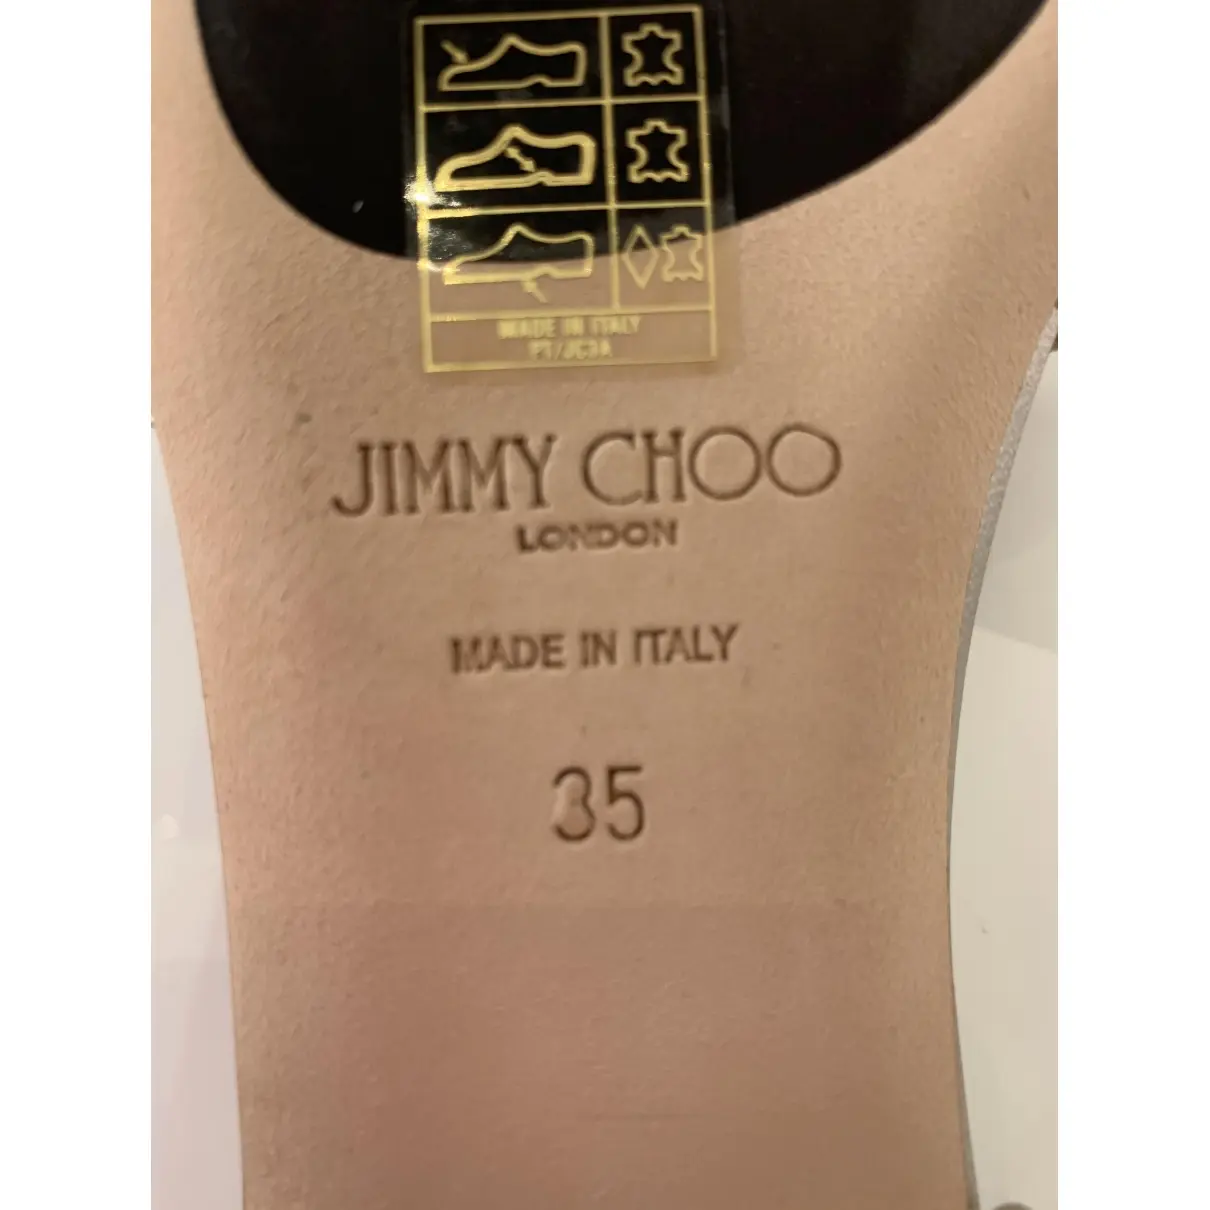 Buy Jimmy Choo Leather mules online